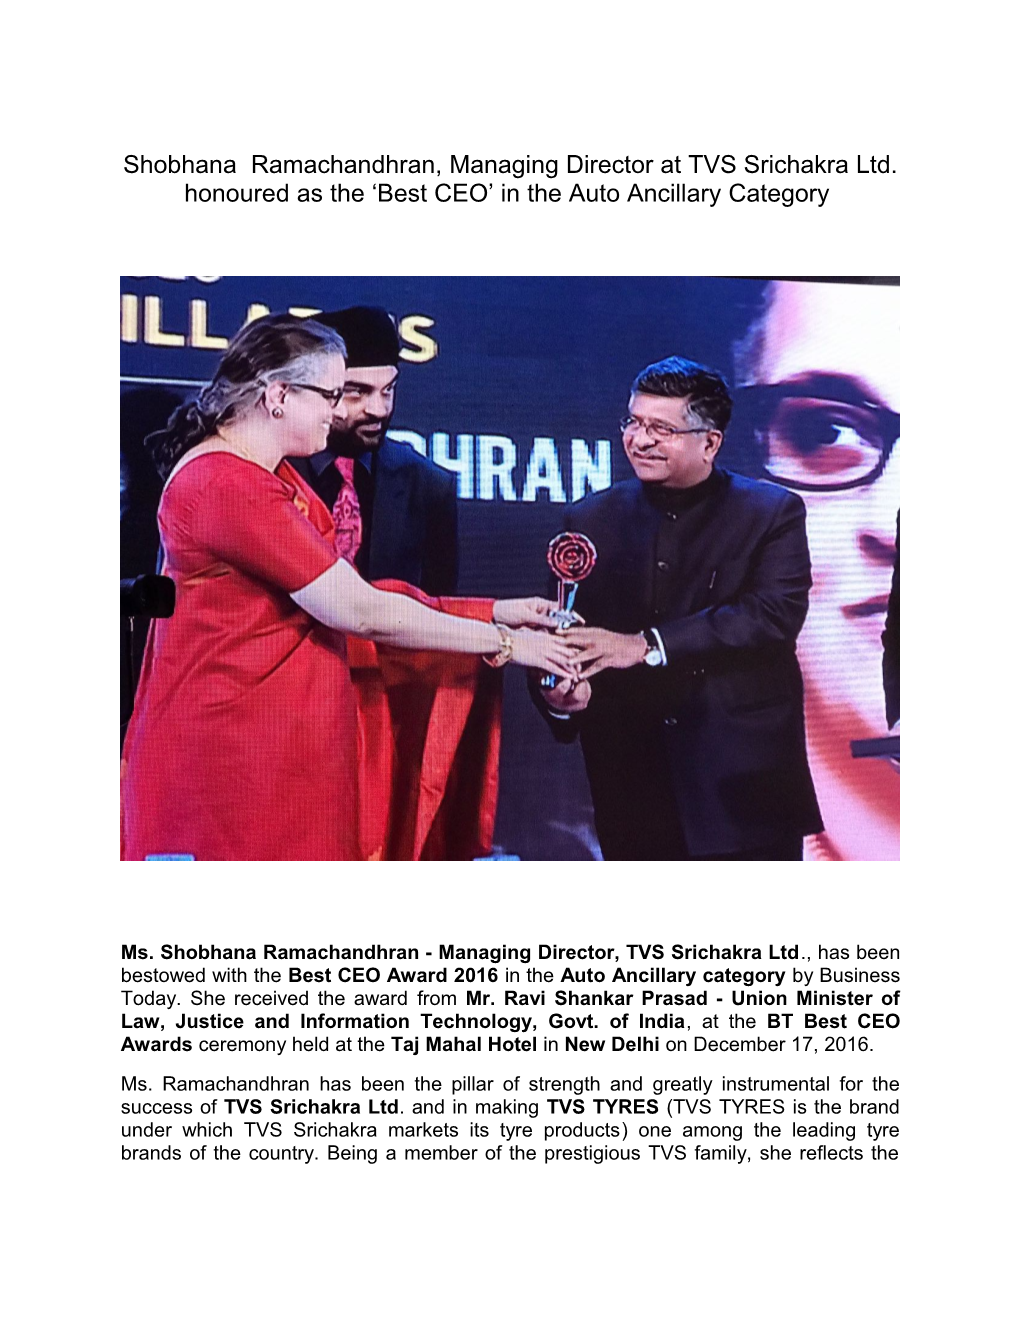 Shobhana Ramachandhran, Managing Director at TVS Srichakra Ltd. Honoured As the Best CEO